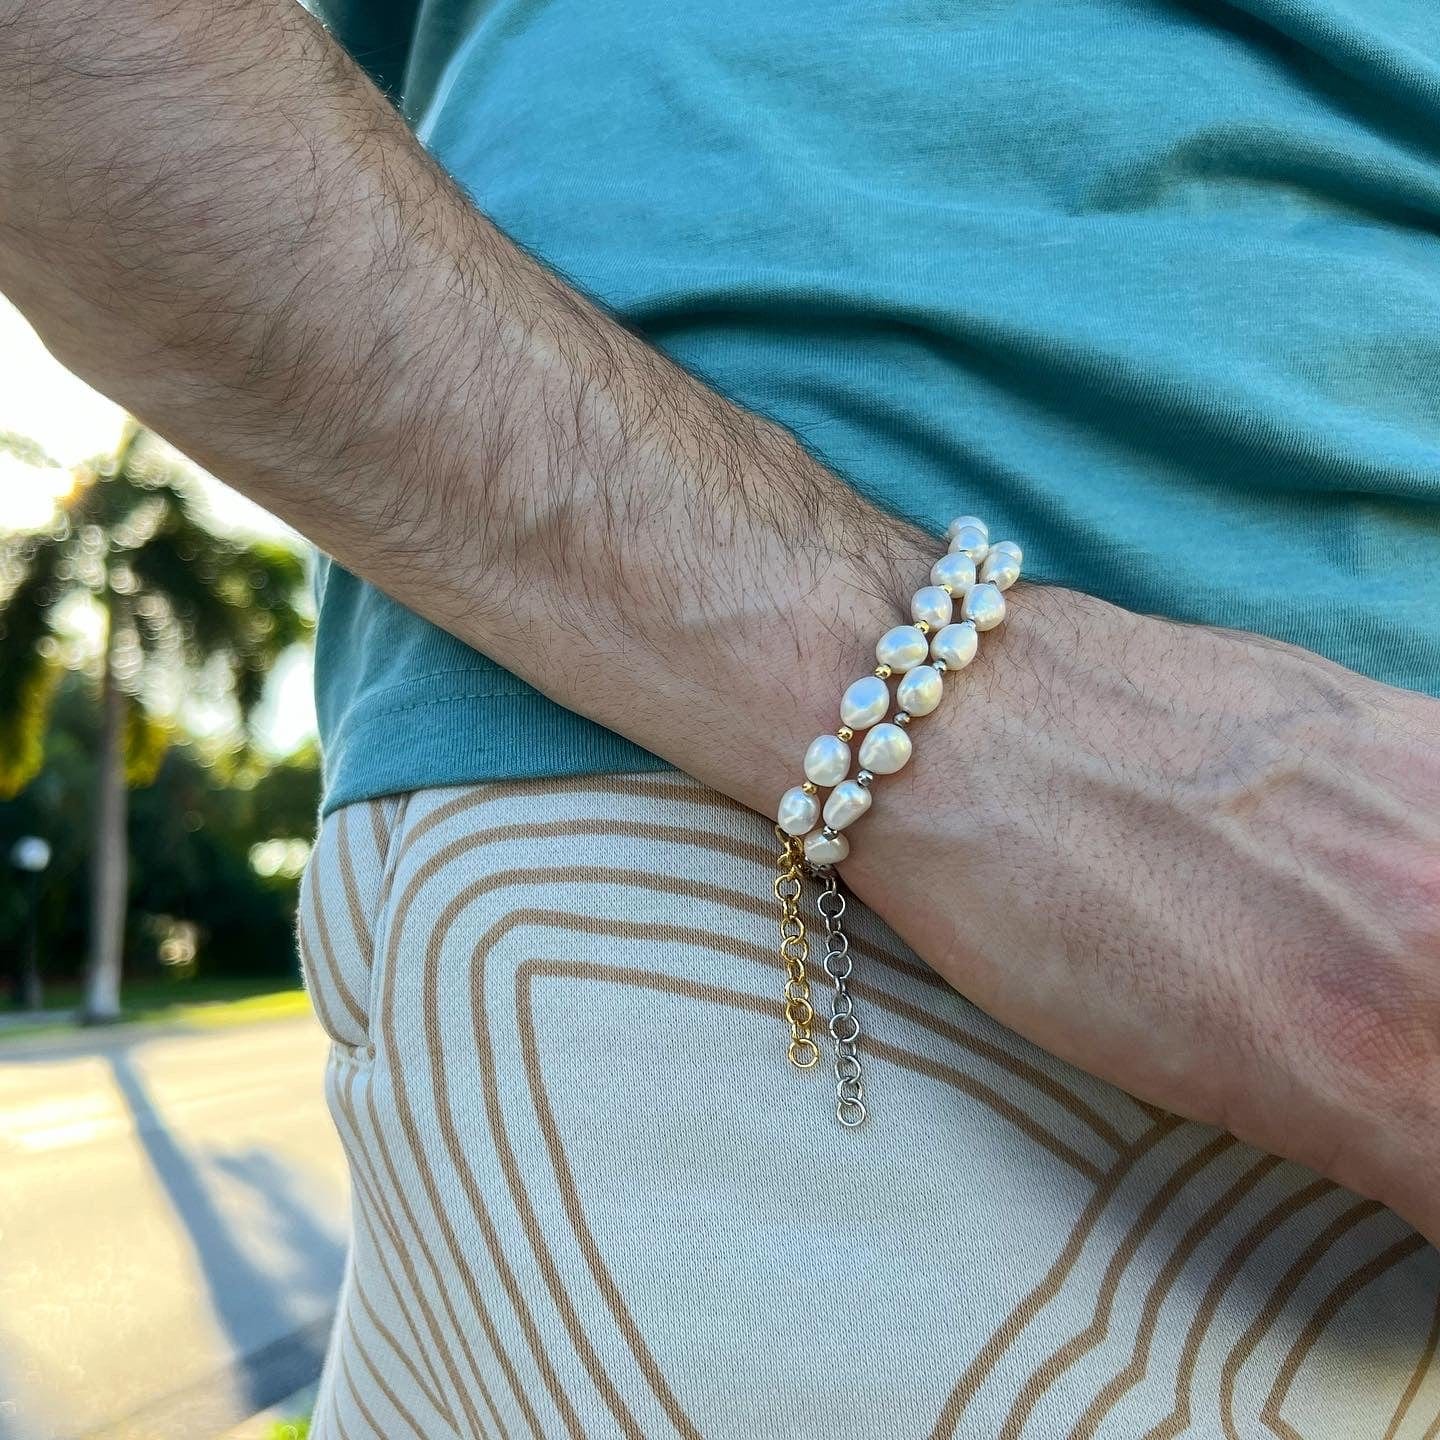 Baroque Pearls Bracelet 7MM - Silver